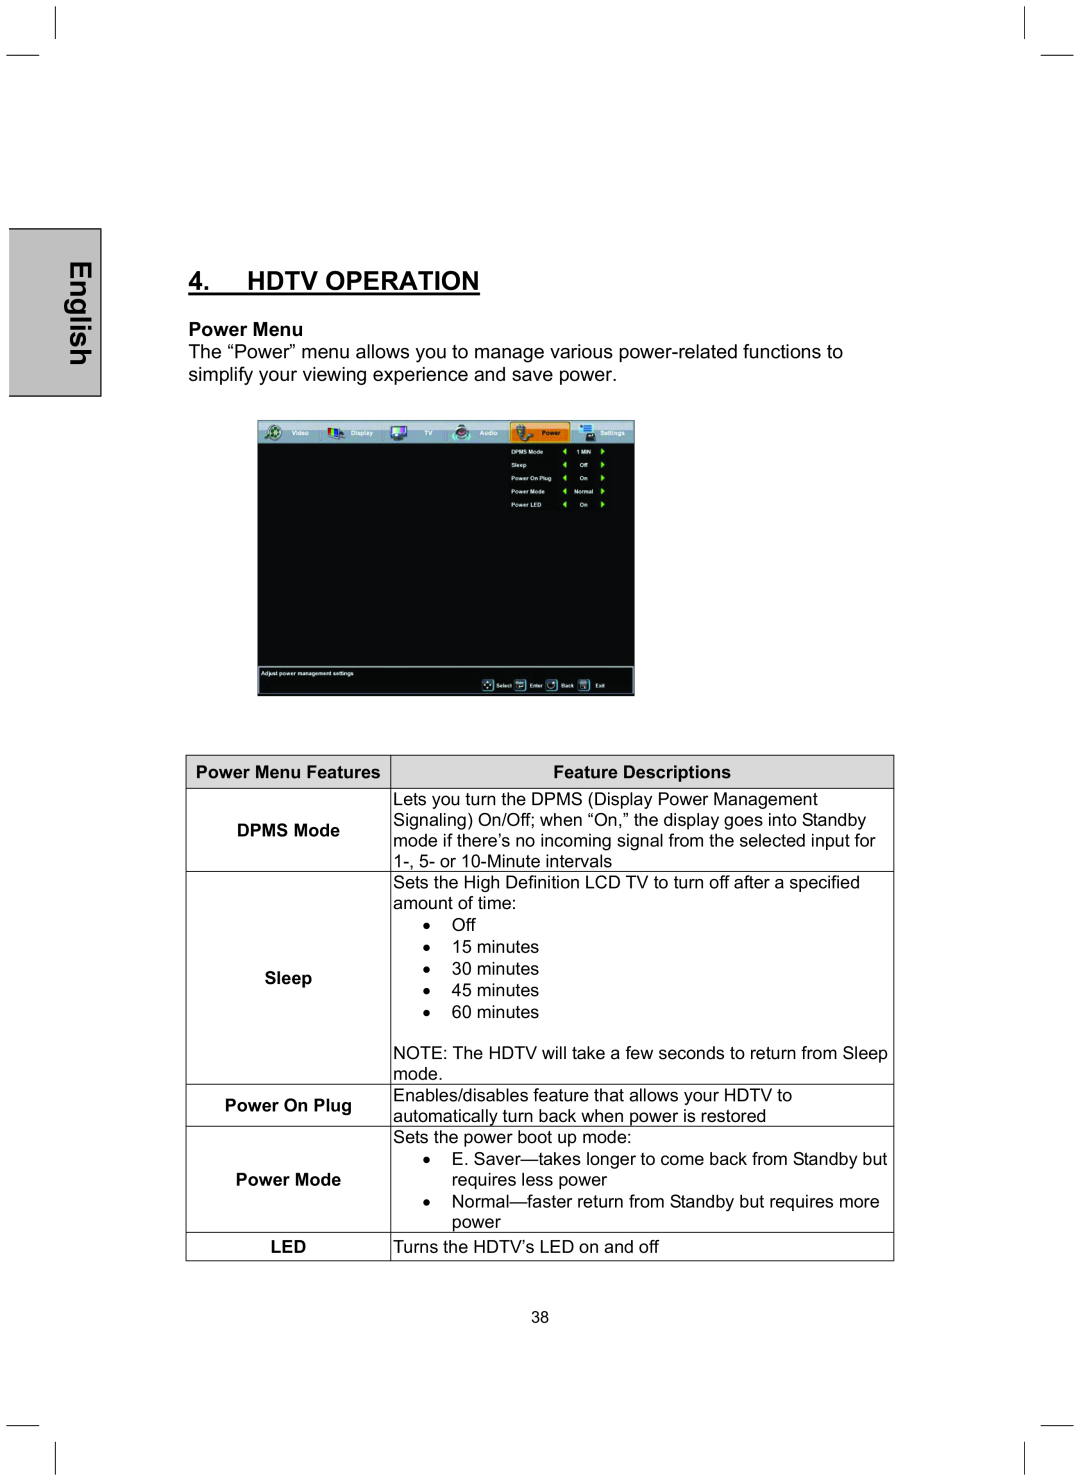 Westinghouse TX-52H480S user manual English, Hdtv Operation, Power Menu Features, Feature Descriptions 